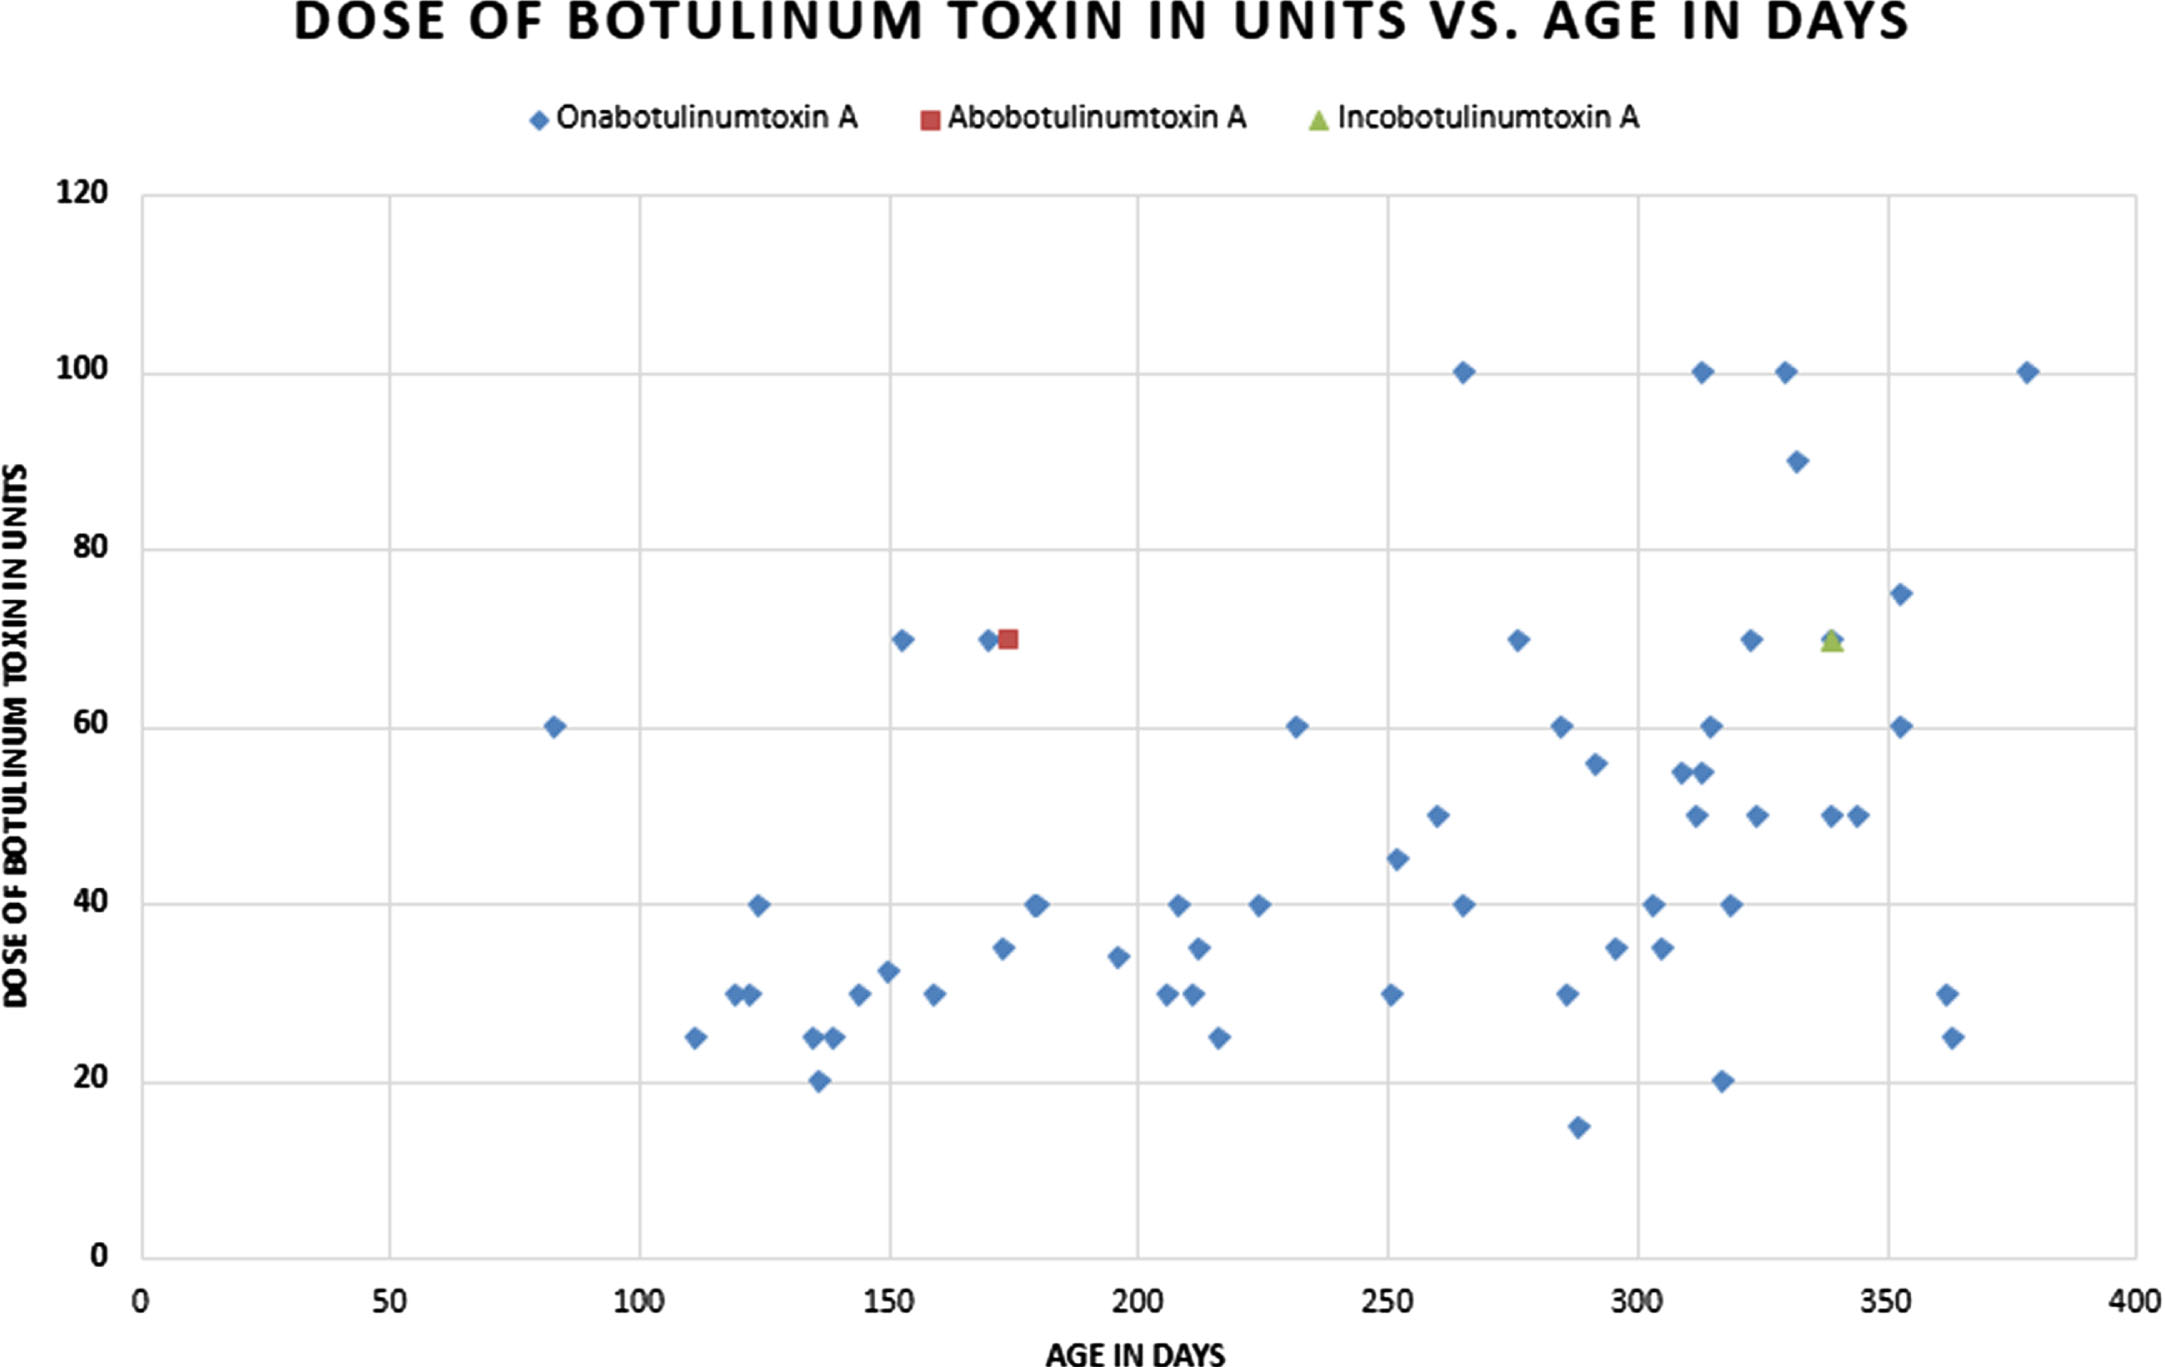 Dose of Botulinum Toxin in units vs. Age in Days.